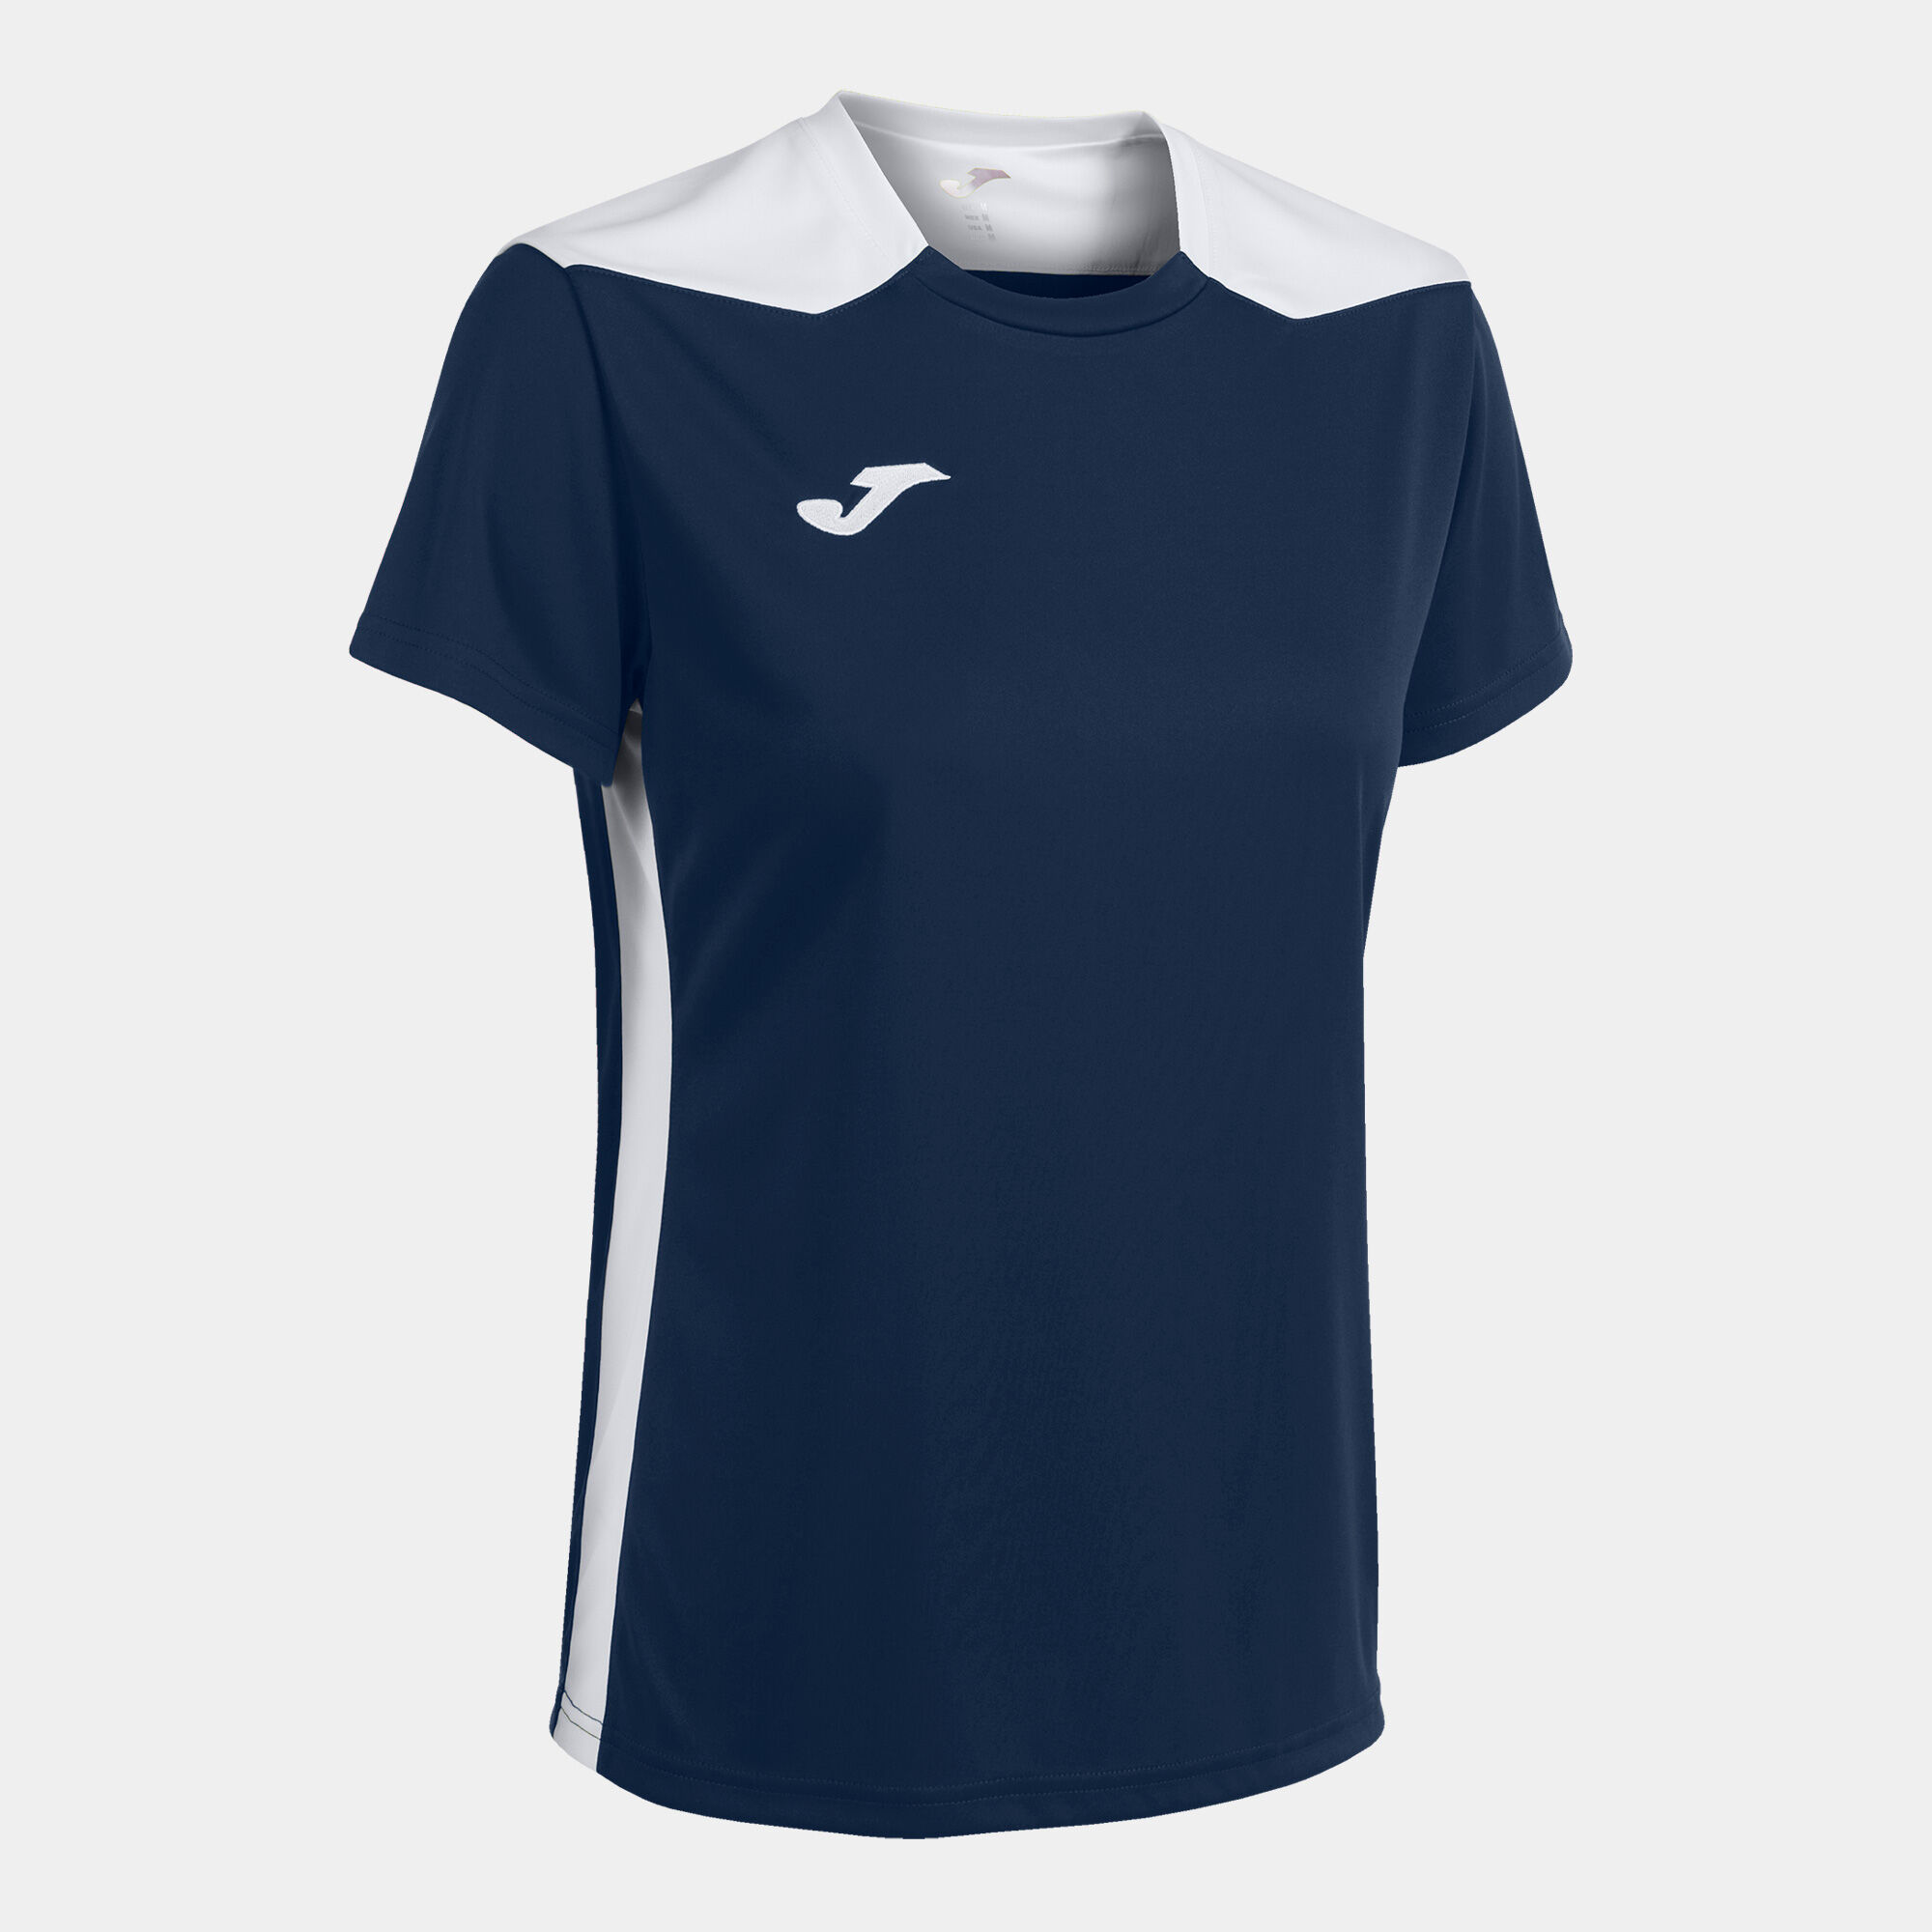 Shirt short sleeve woman Championship VI navy blue white